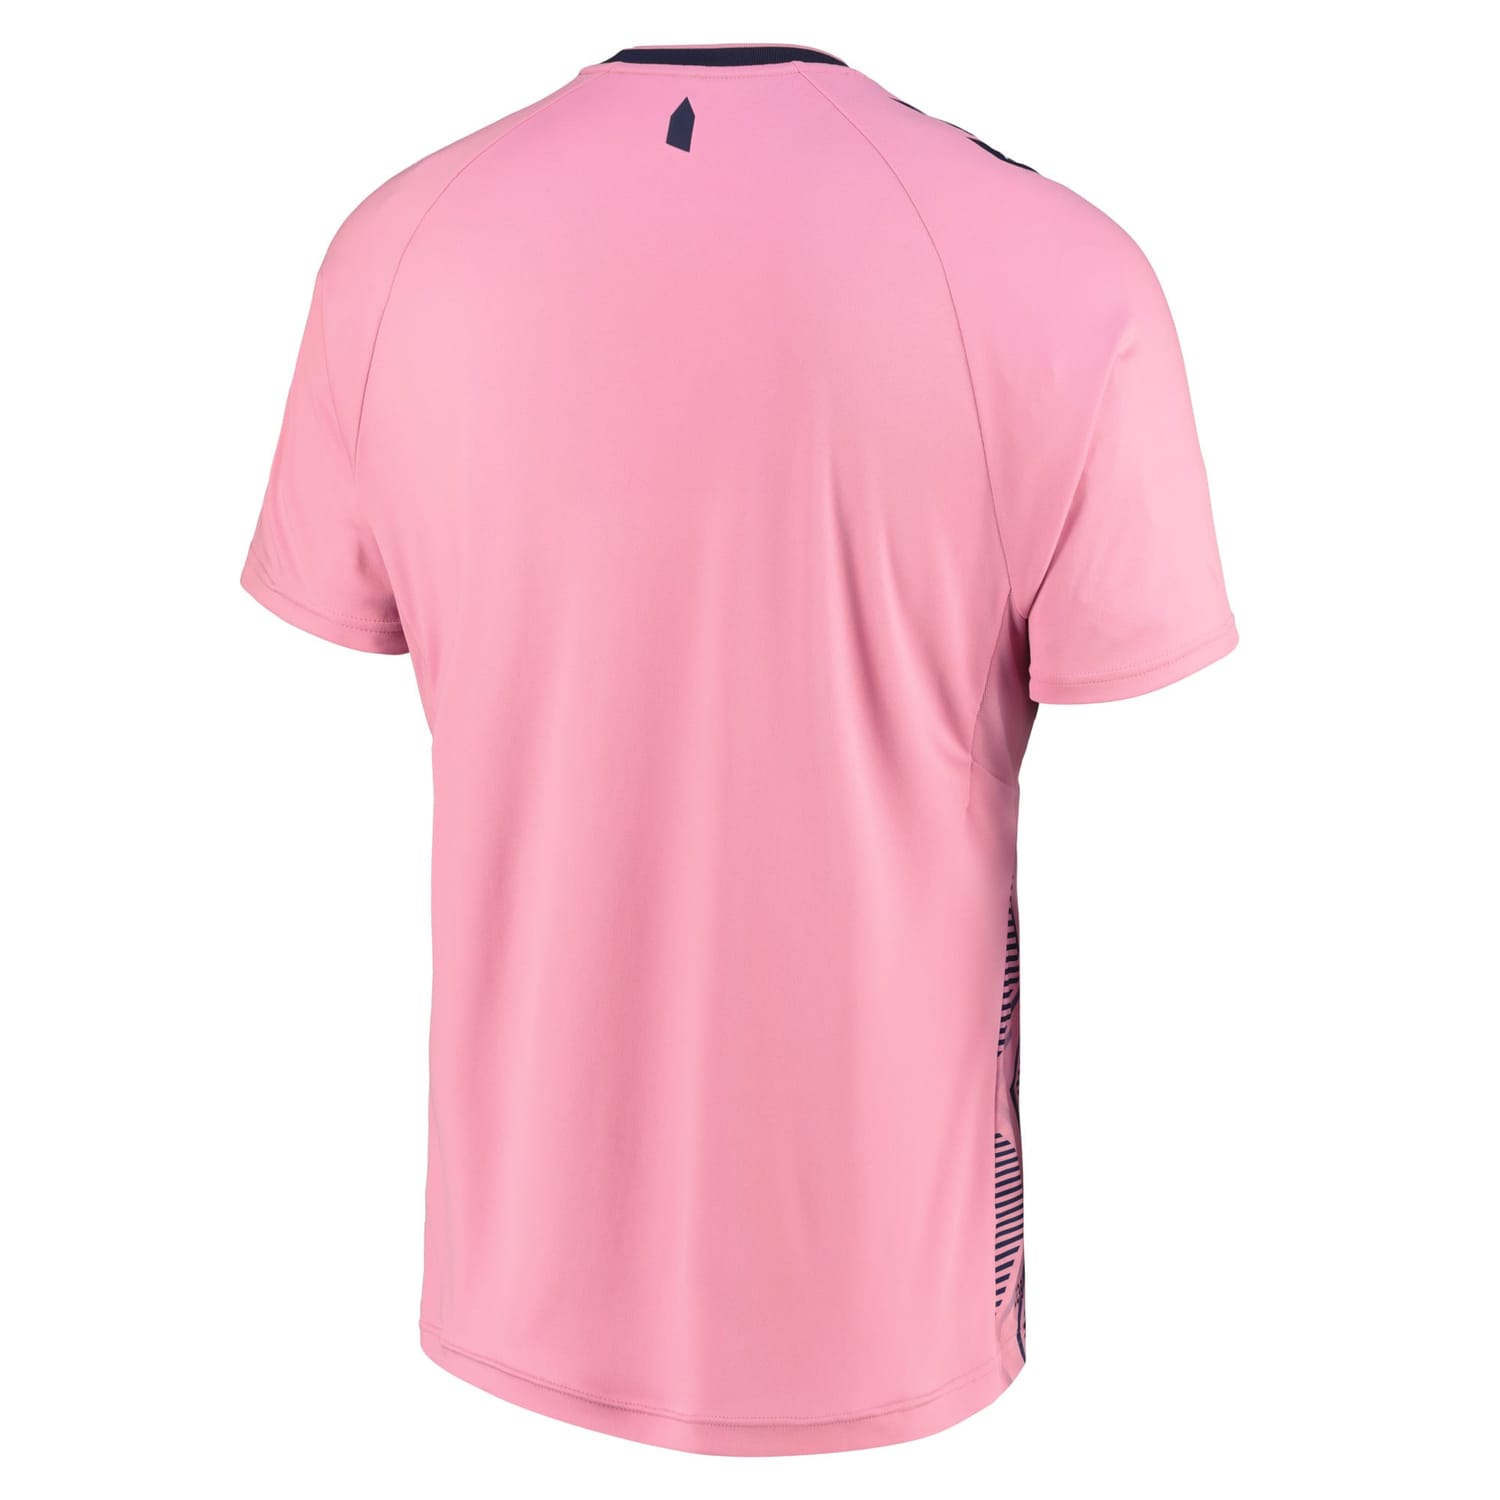 Premier League Everton Away Jersey Shirt Pink 2022-23 for Men